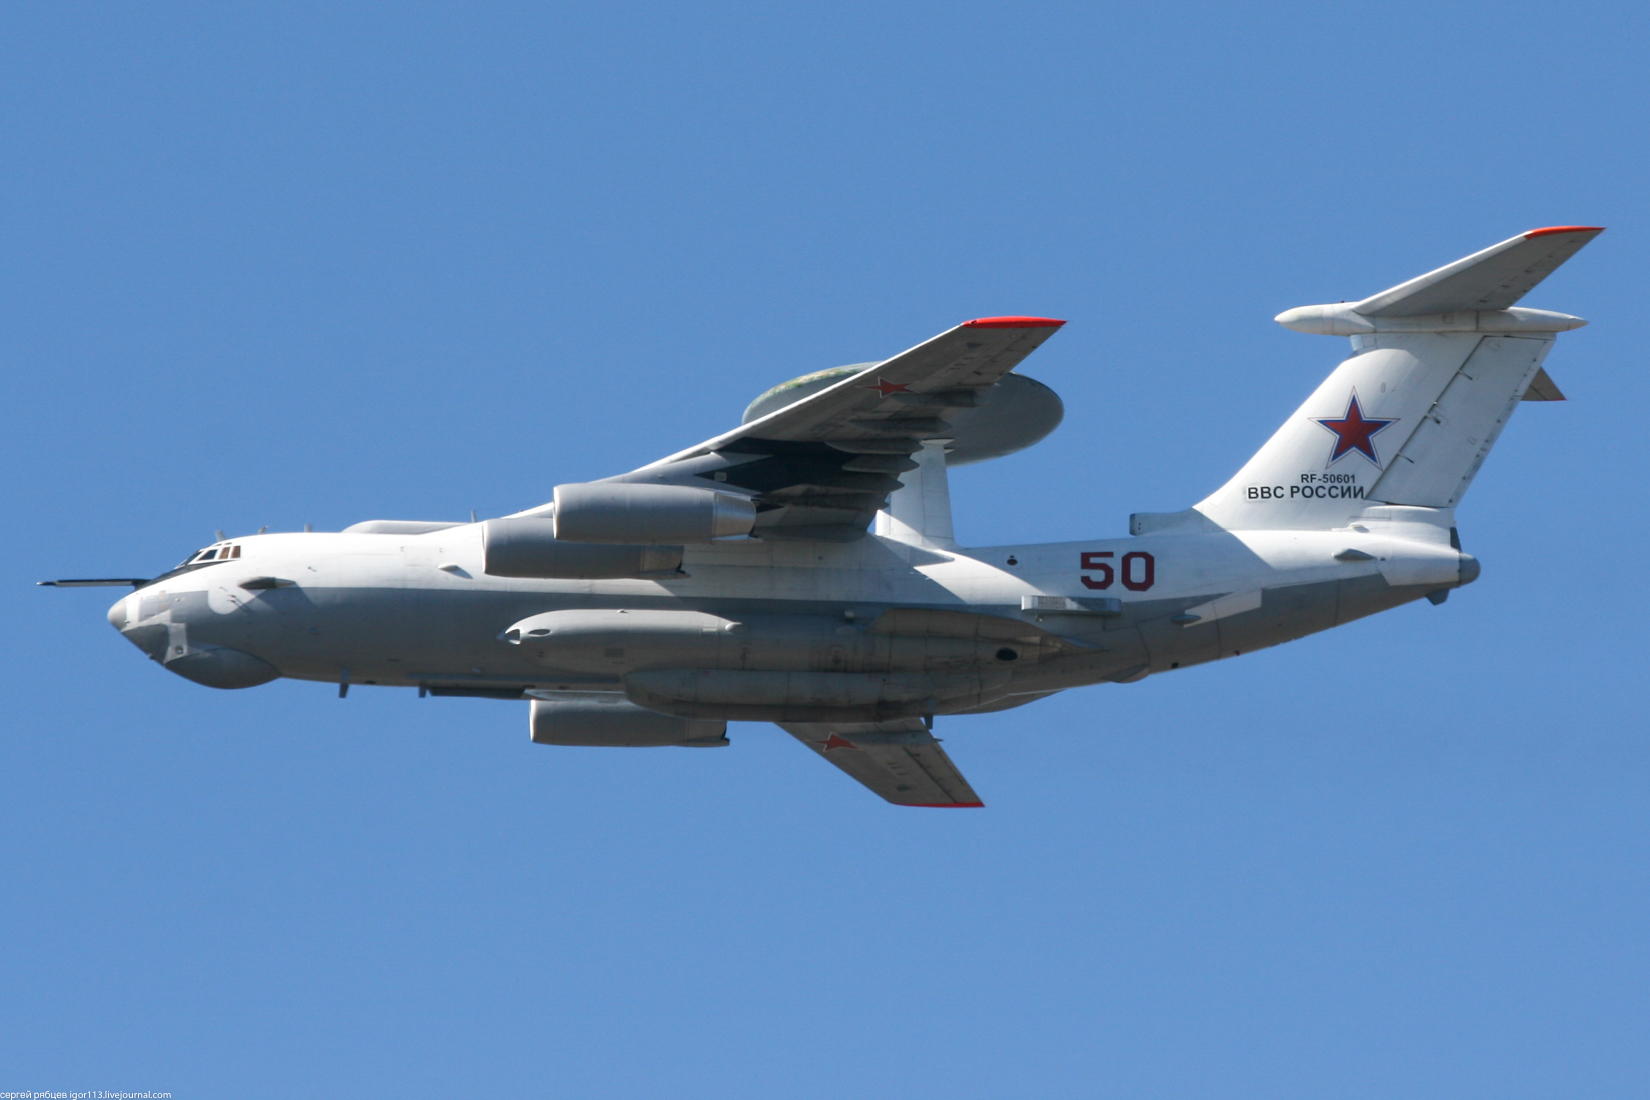 Ukraine says it downed Russian A-50 radar plane